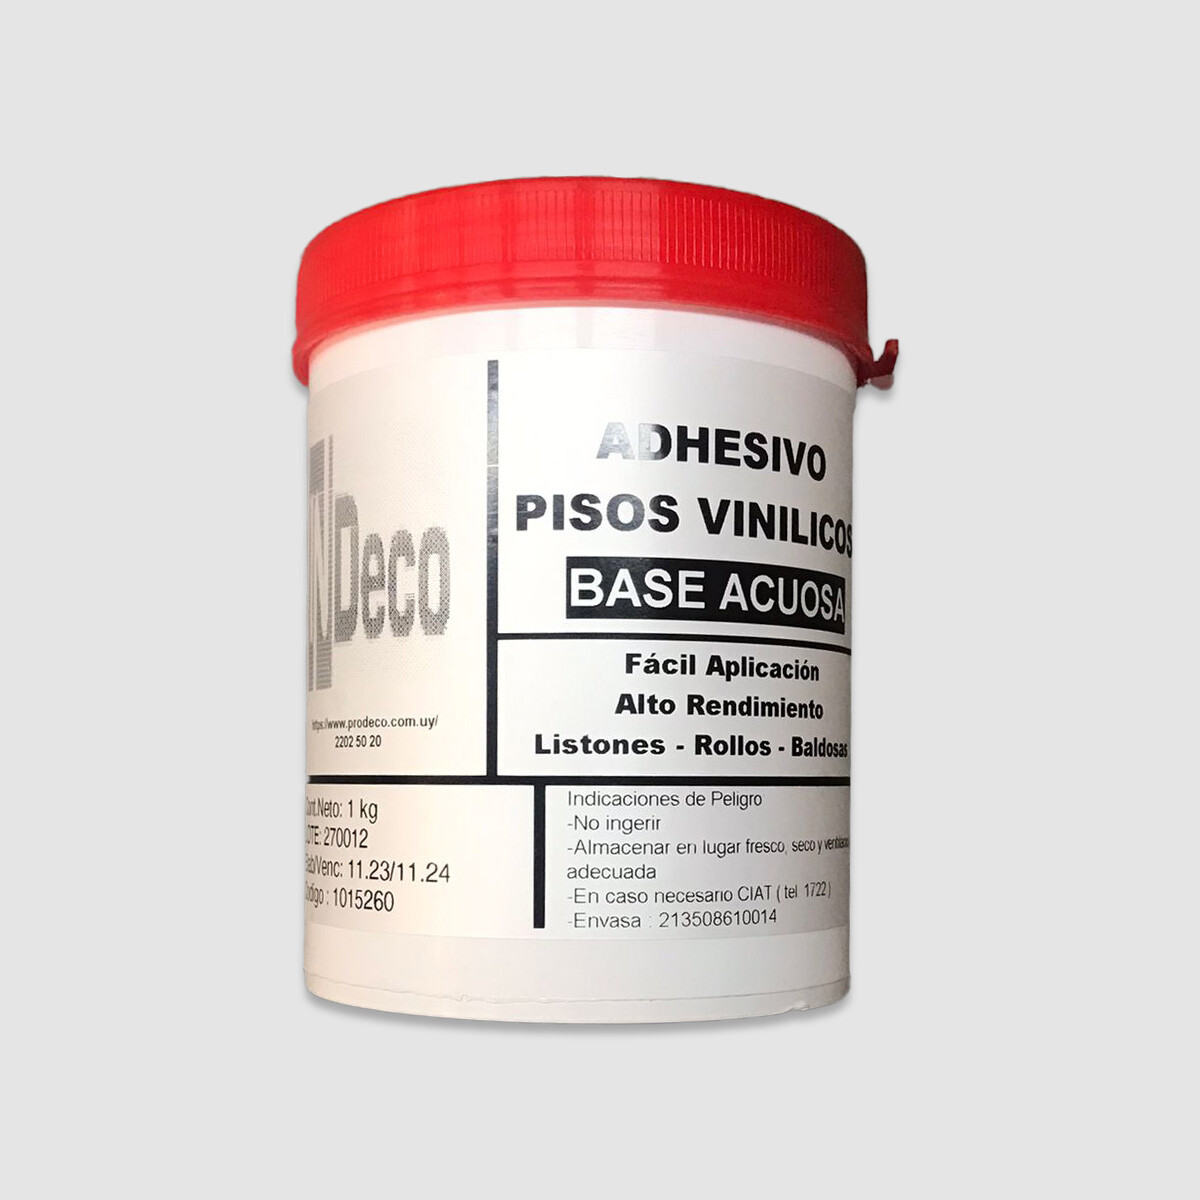 Adhesivo para Pisos Vinilicos base Acuosa 1kg 